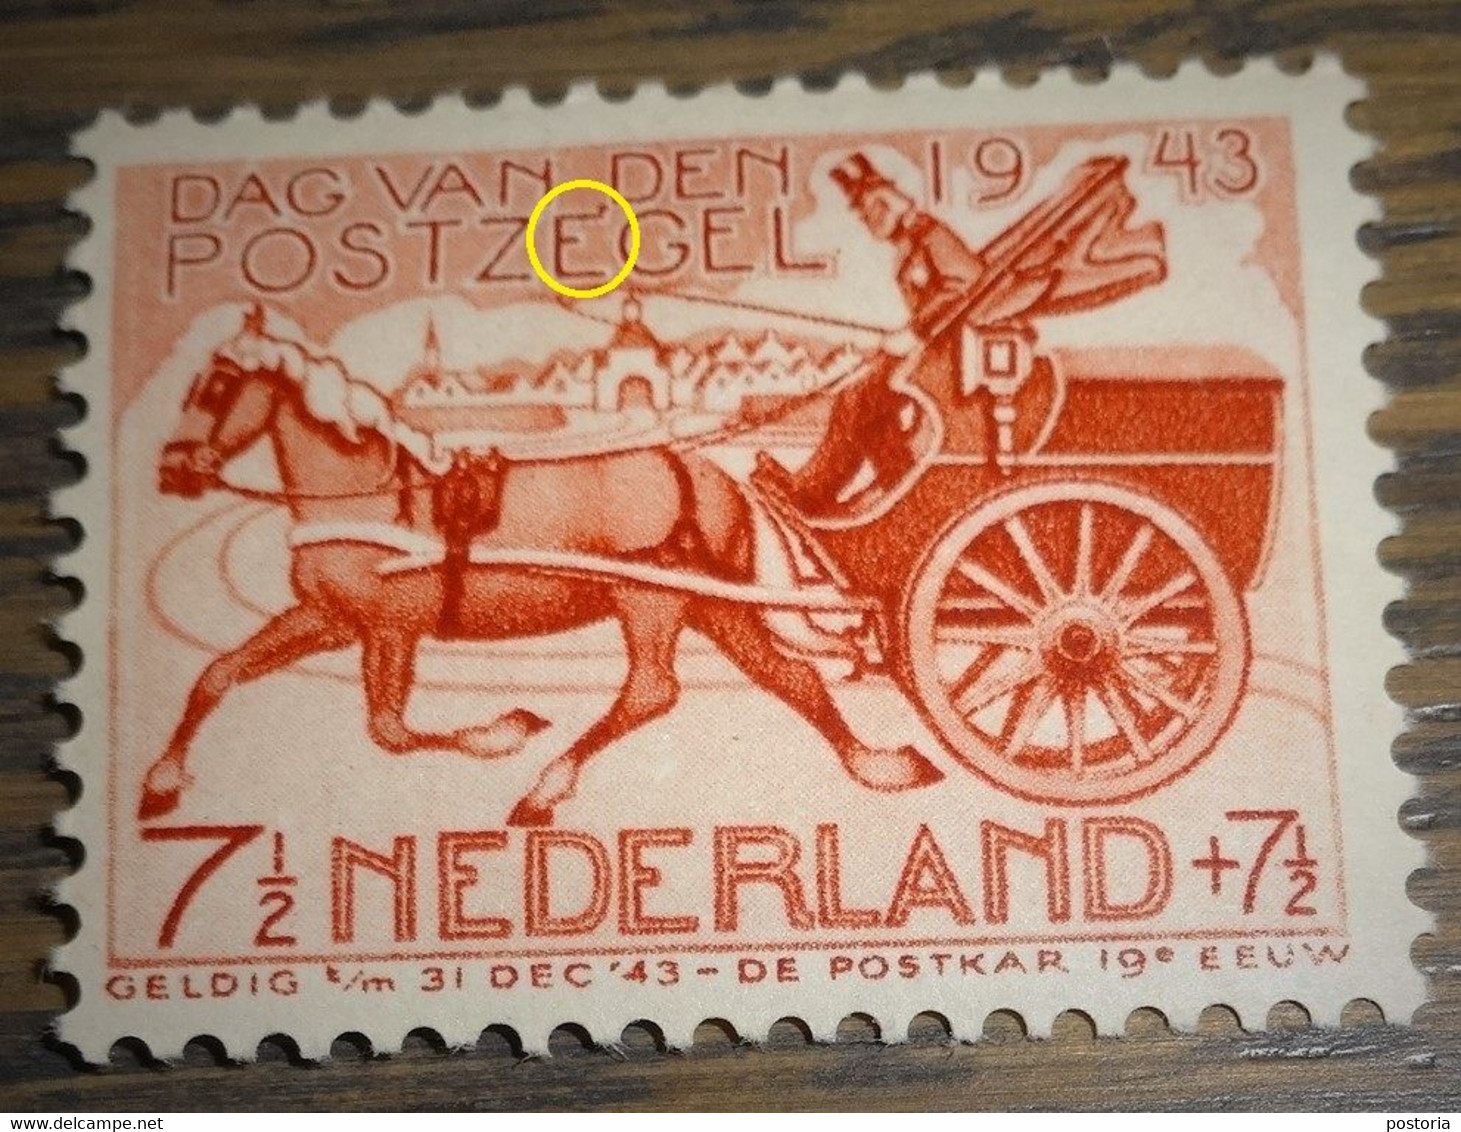 Nederland - MAST - 422 P - 1943 - Plaatfout - Postfris - Puntje Boven 1e E Van POSTZEGEL - Variétés Et Curiosités